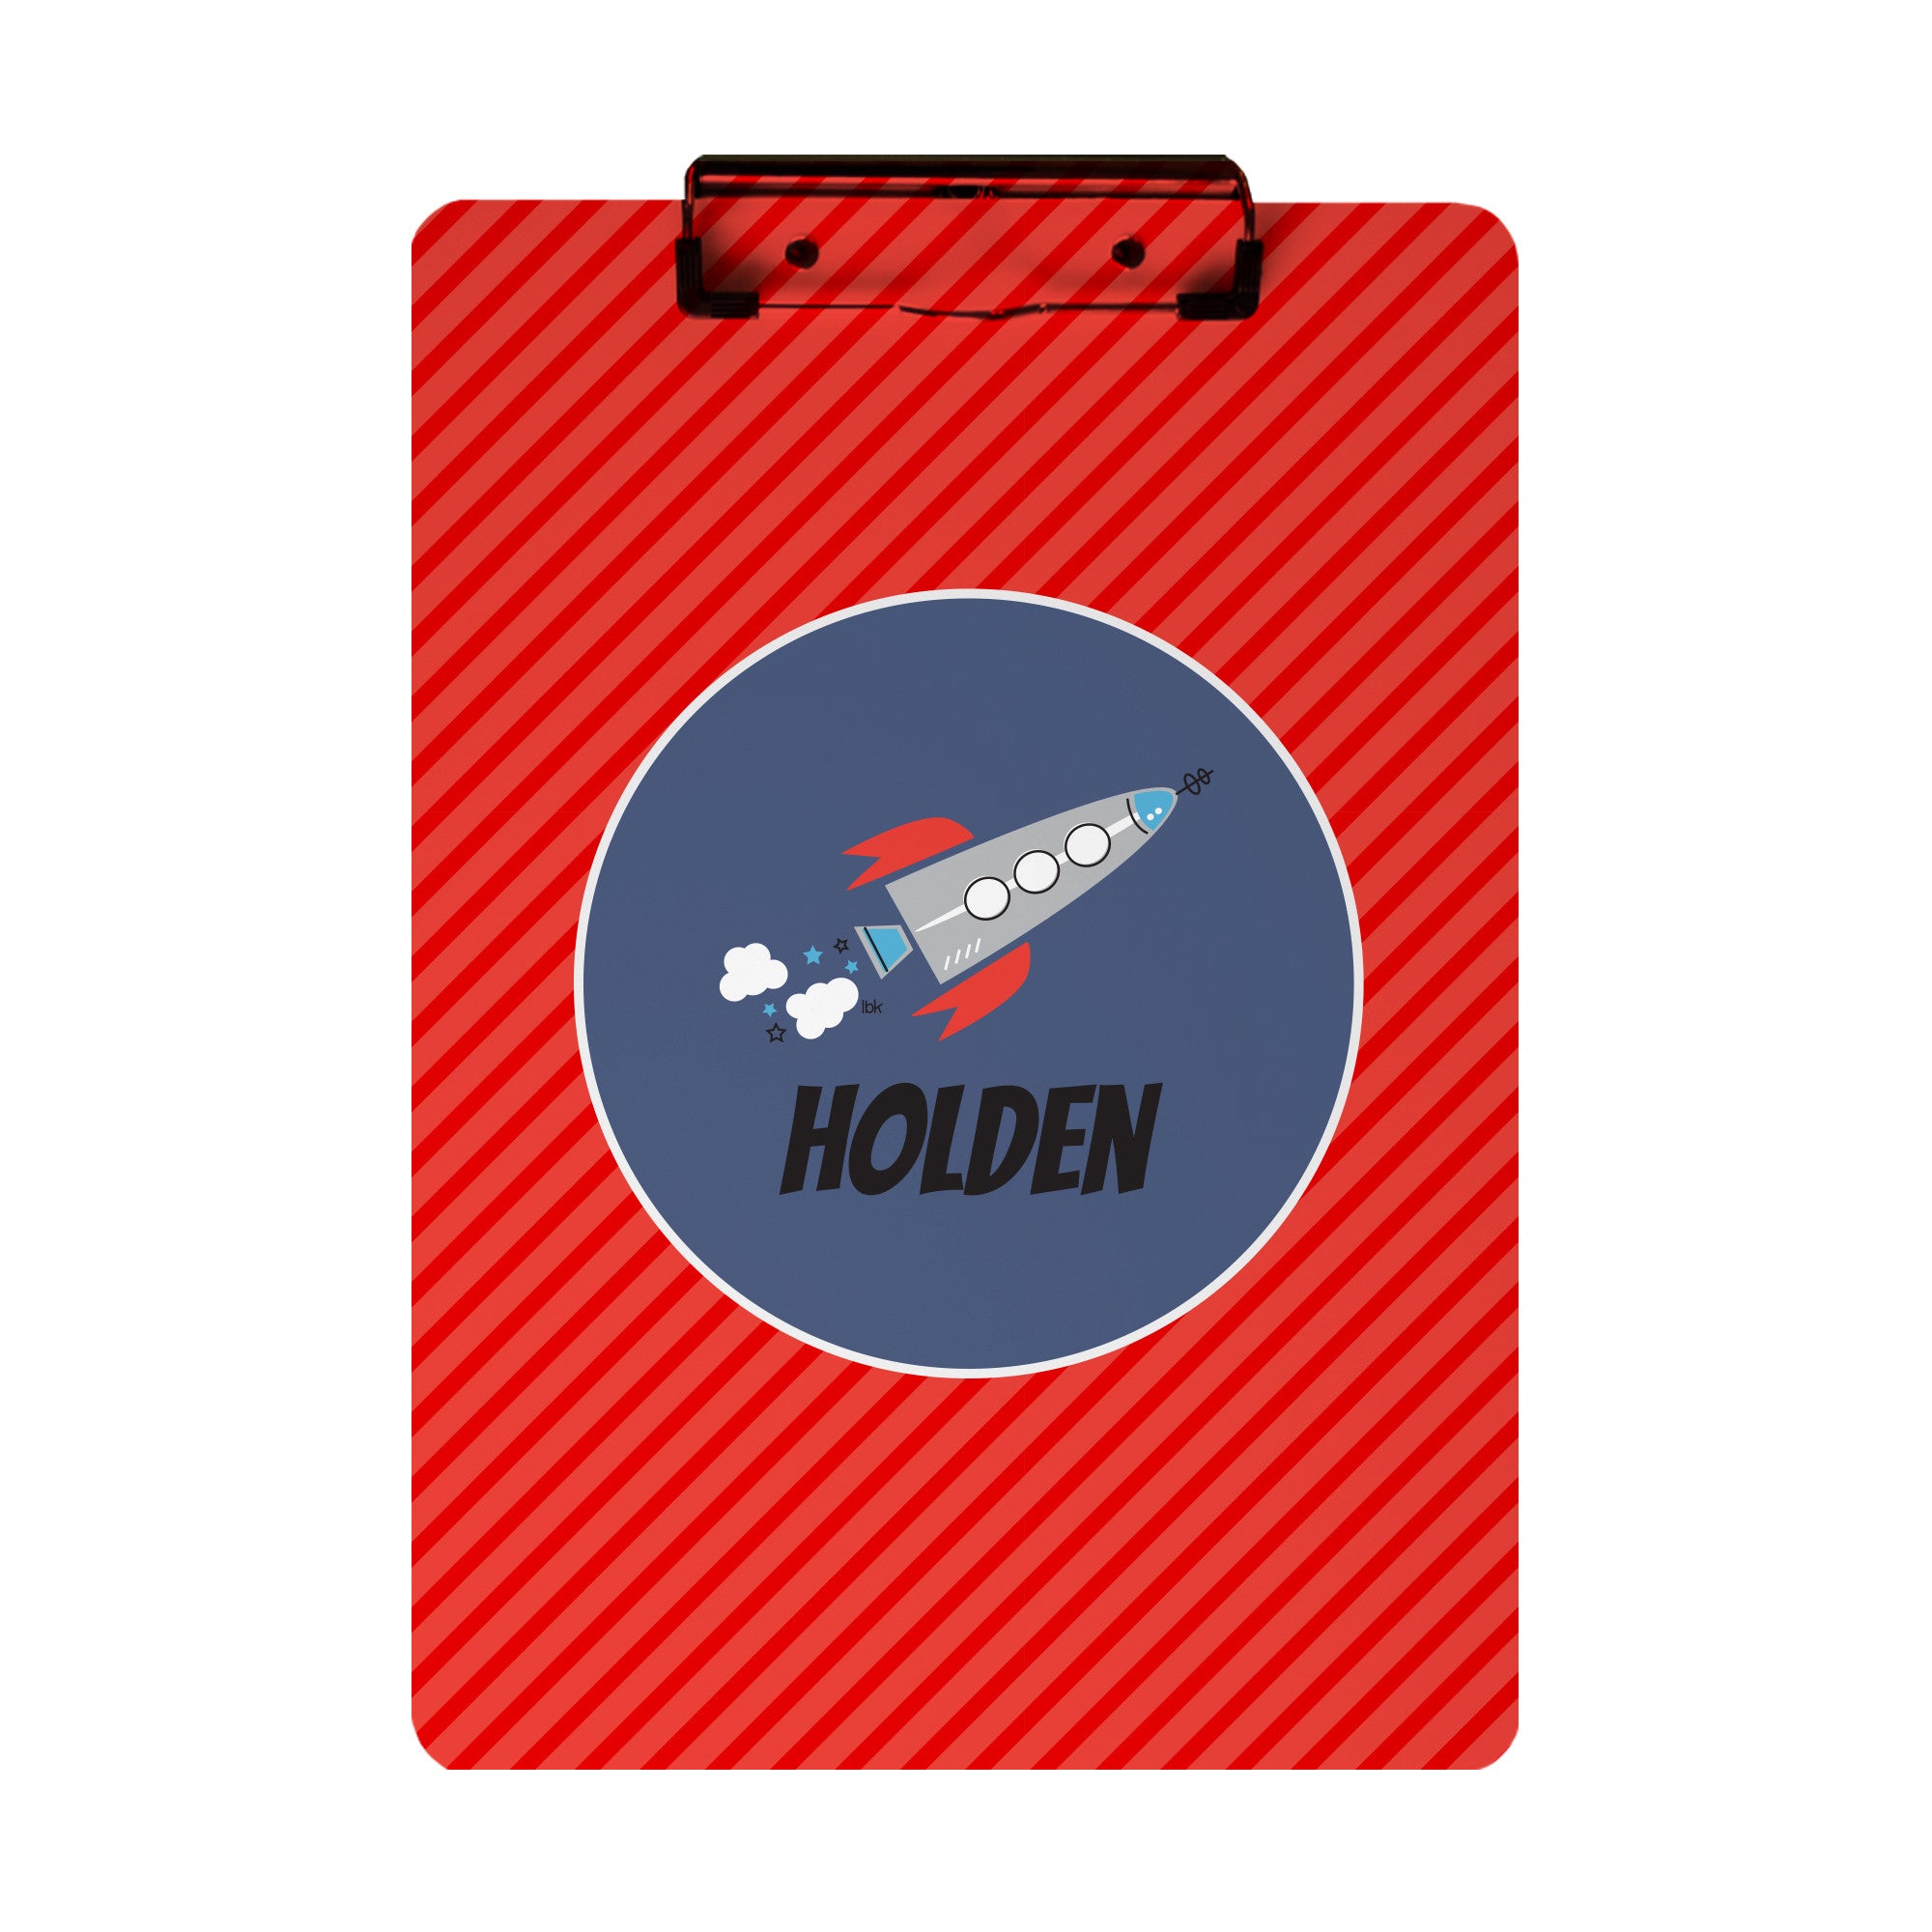 Red Rocket Clip Board